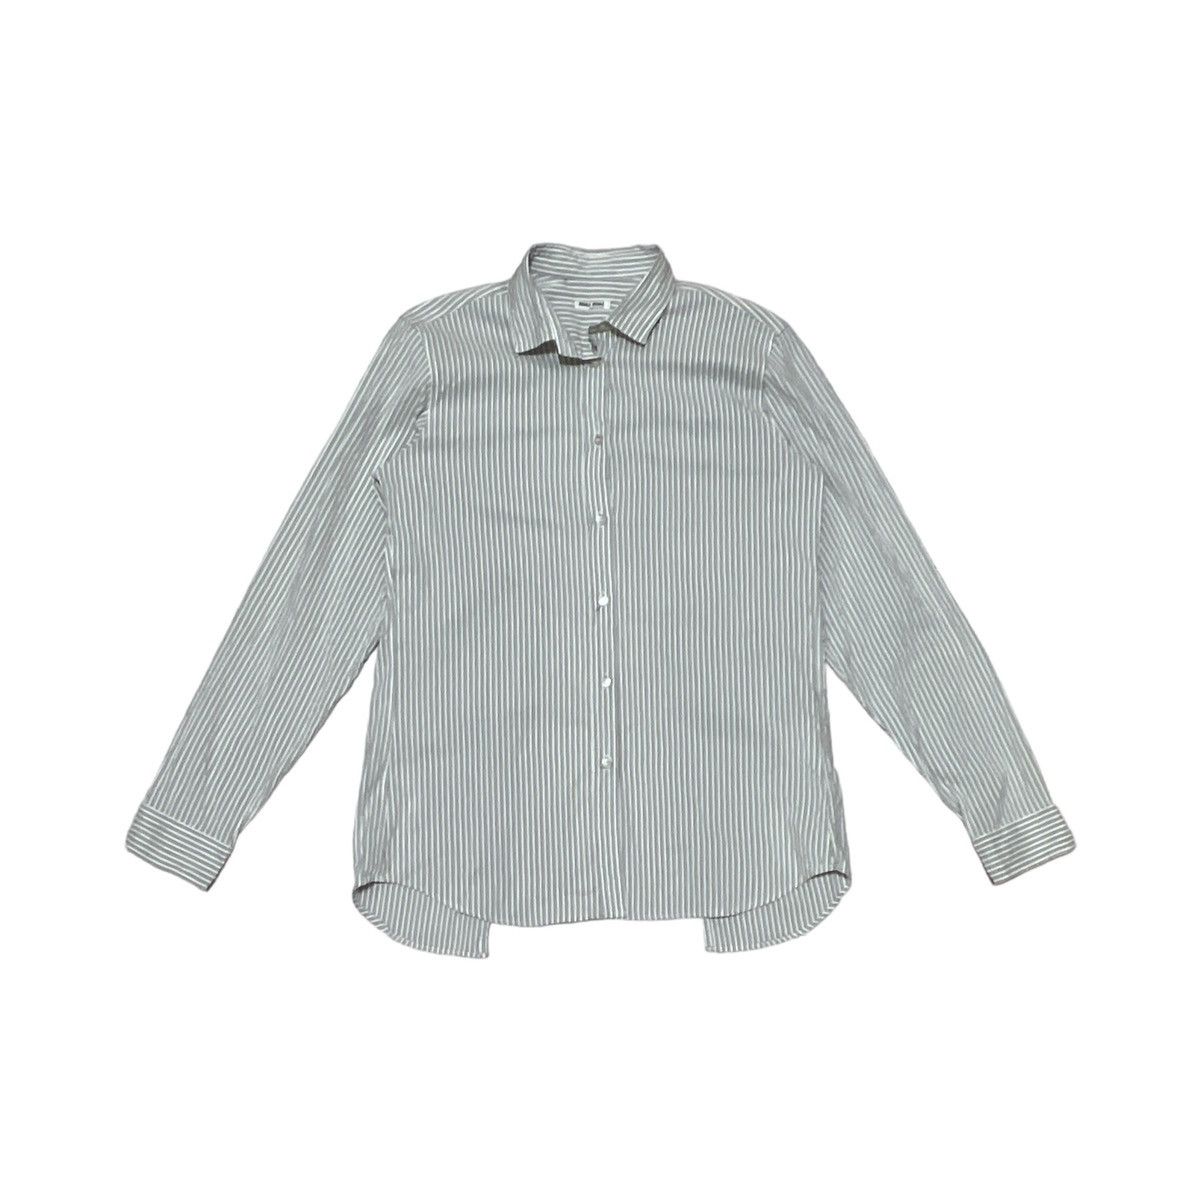 Miu Miu striped button ups shirt 2006 - 1